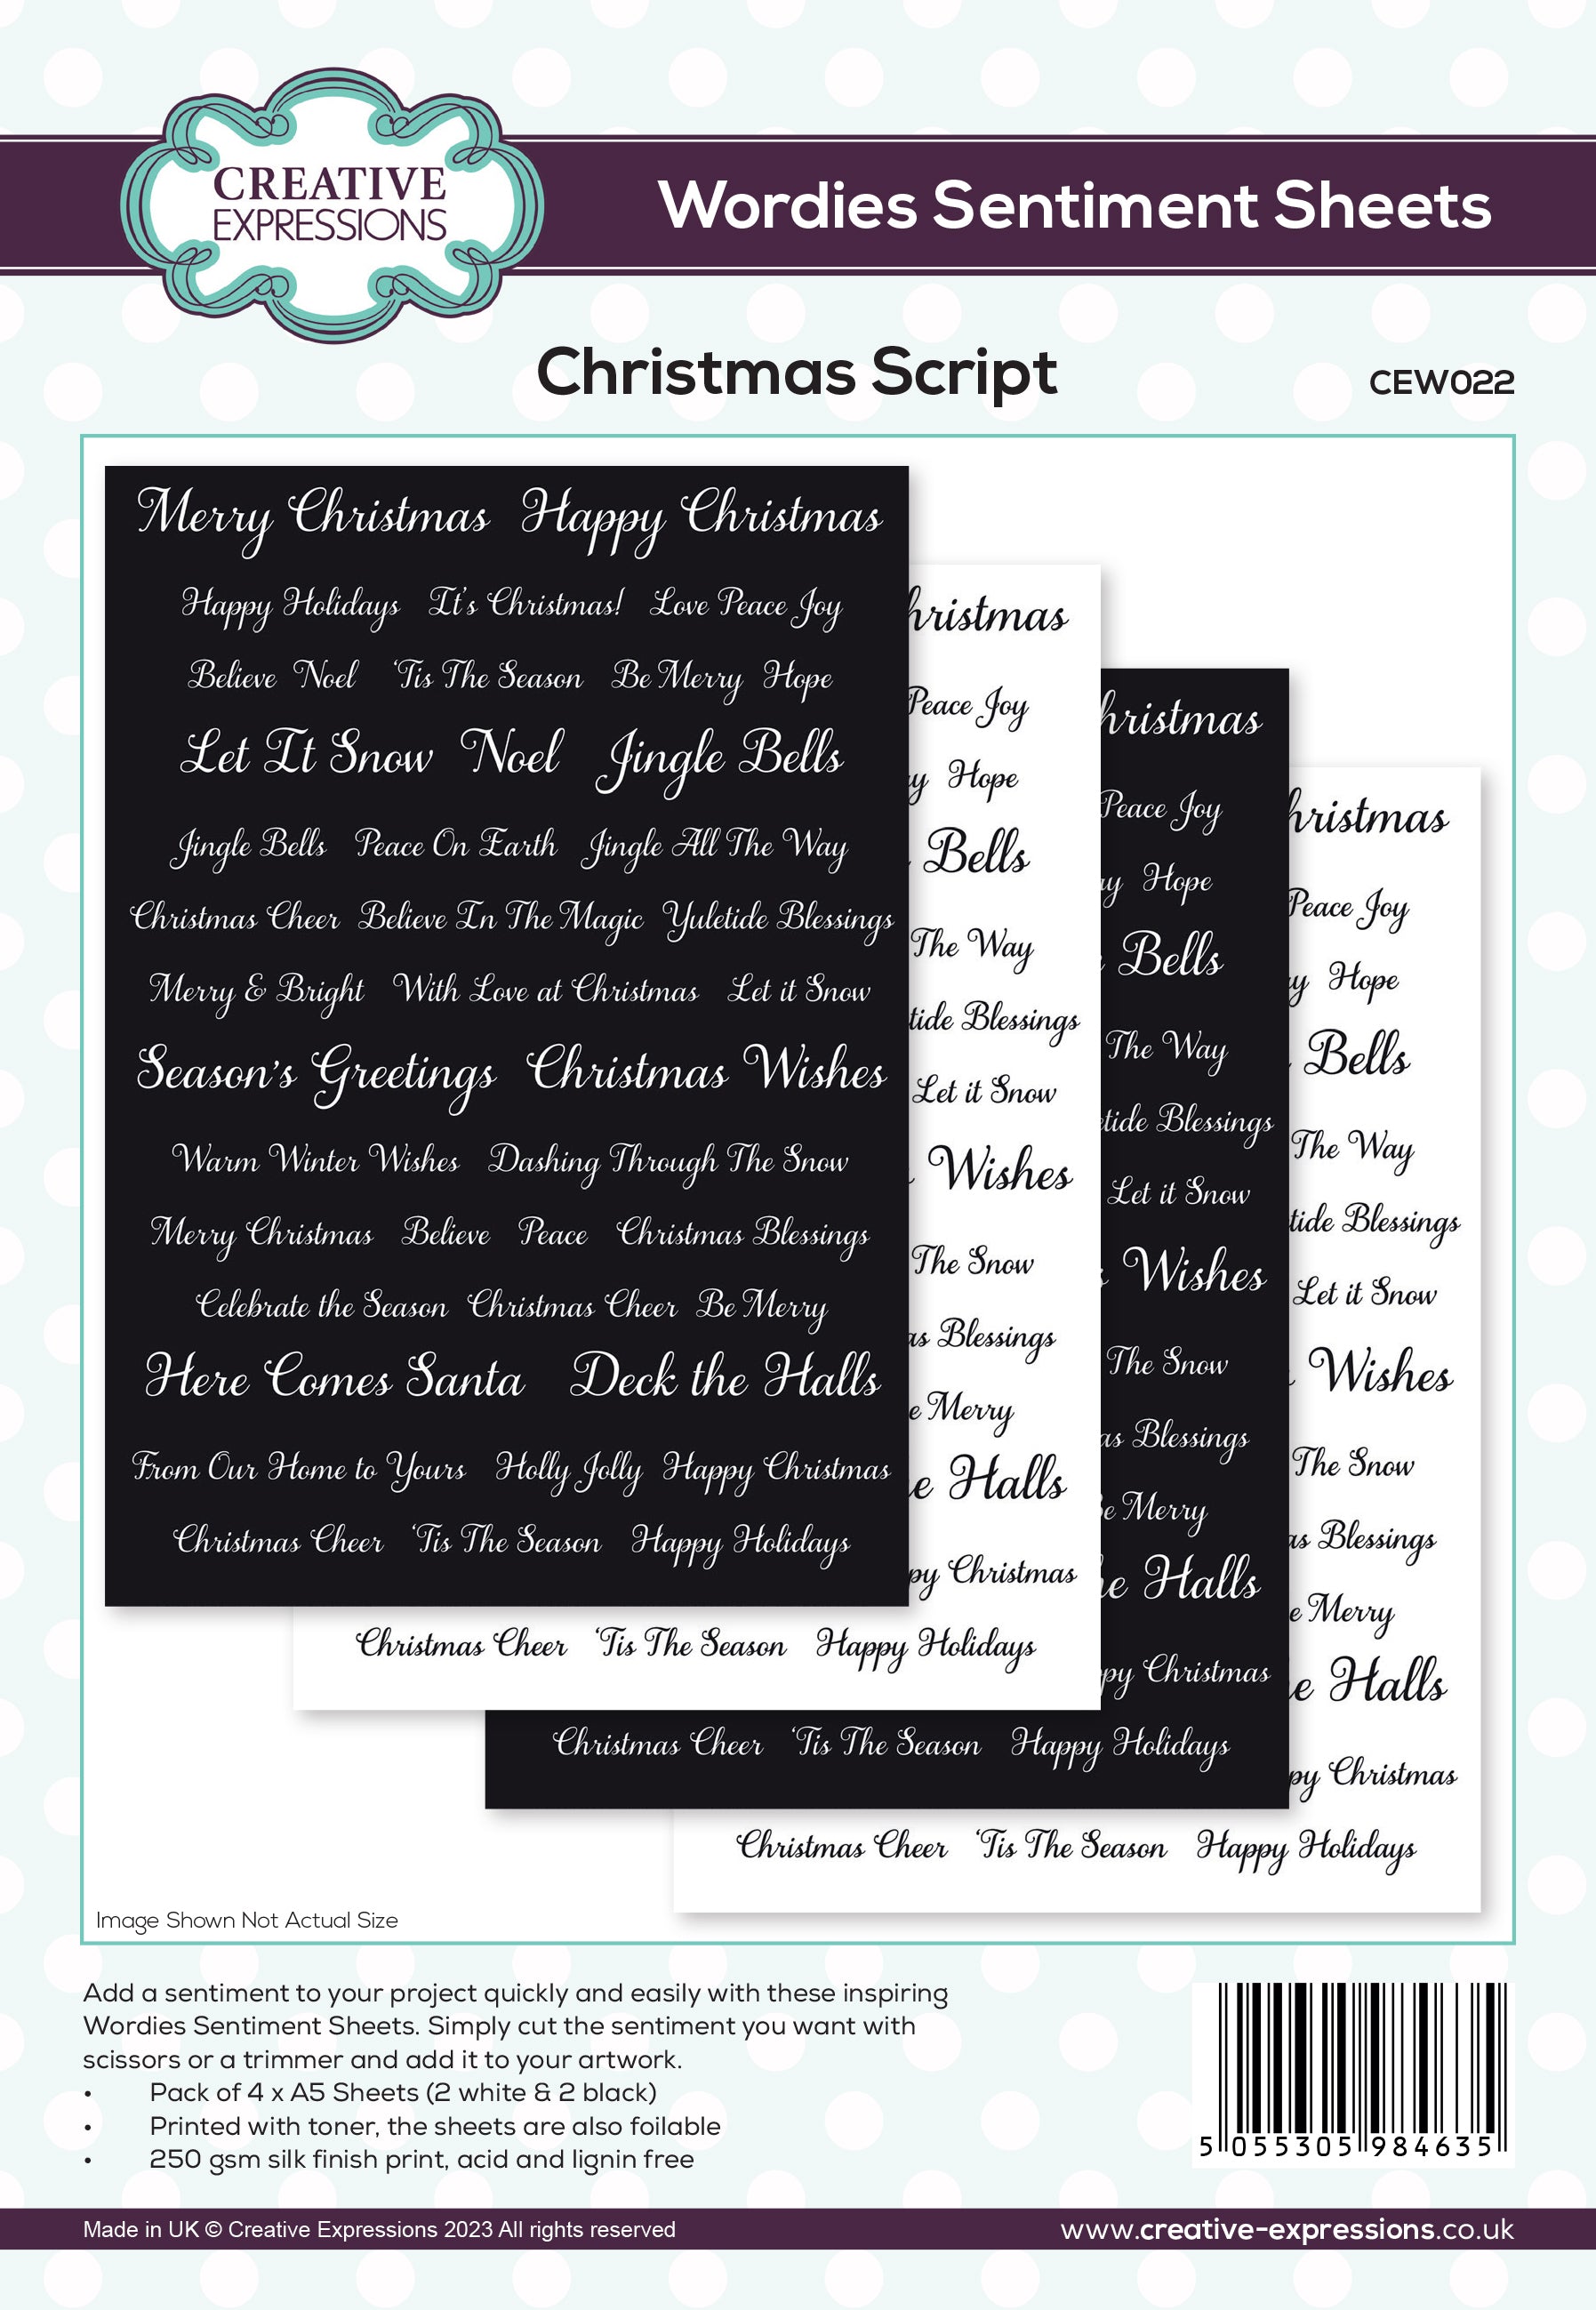 Creative Expressions Wordies Sentiment Sheets Christmas Script